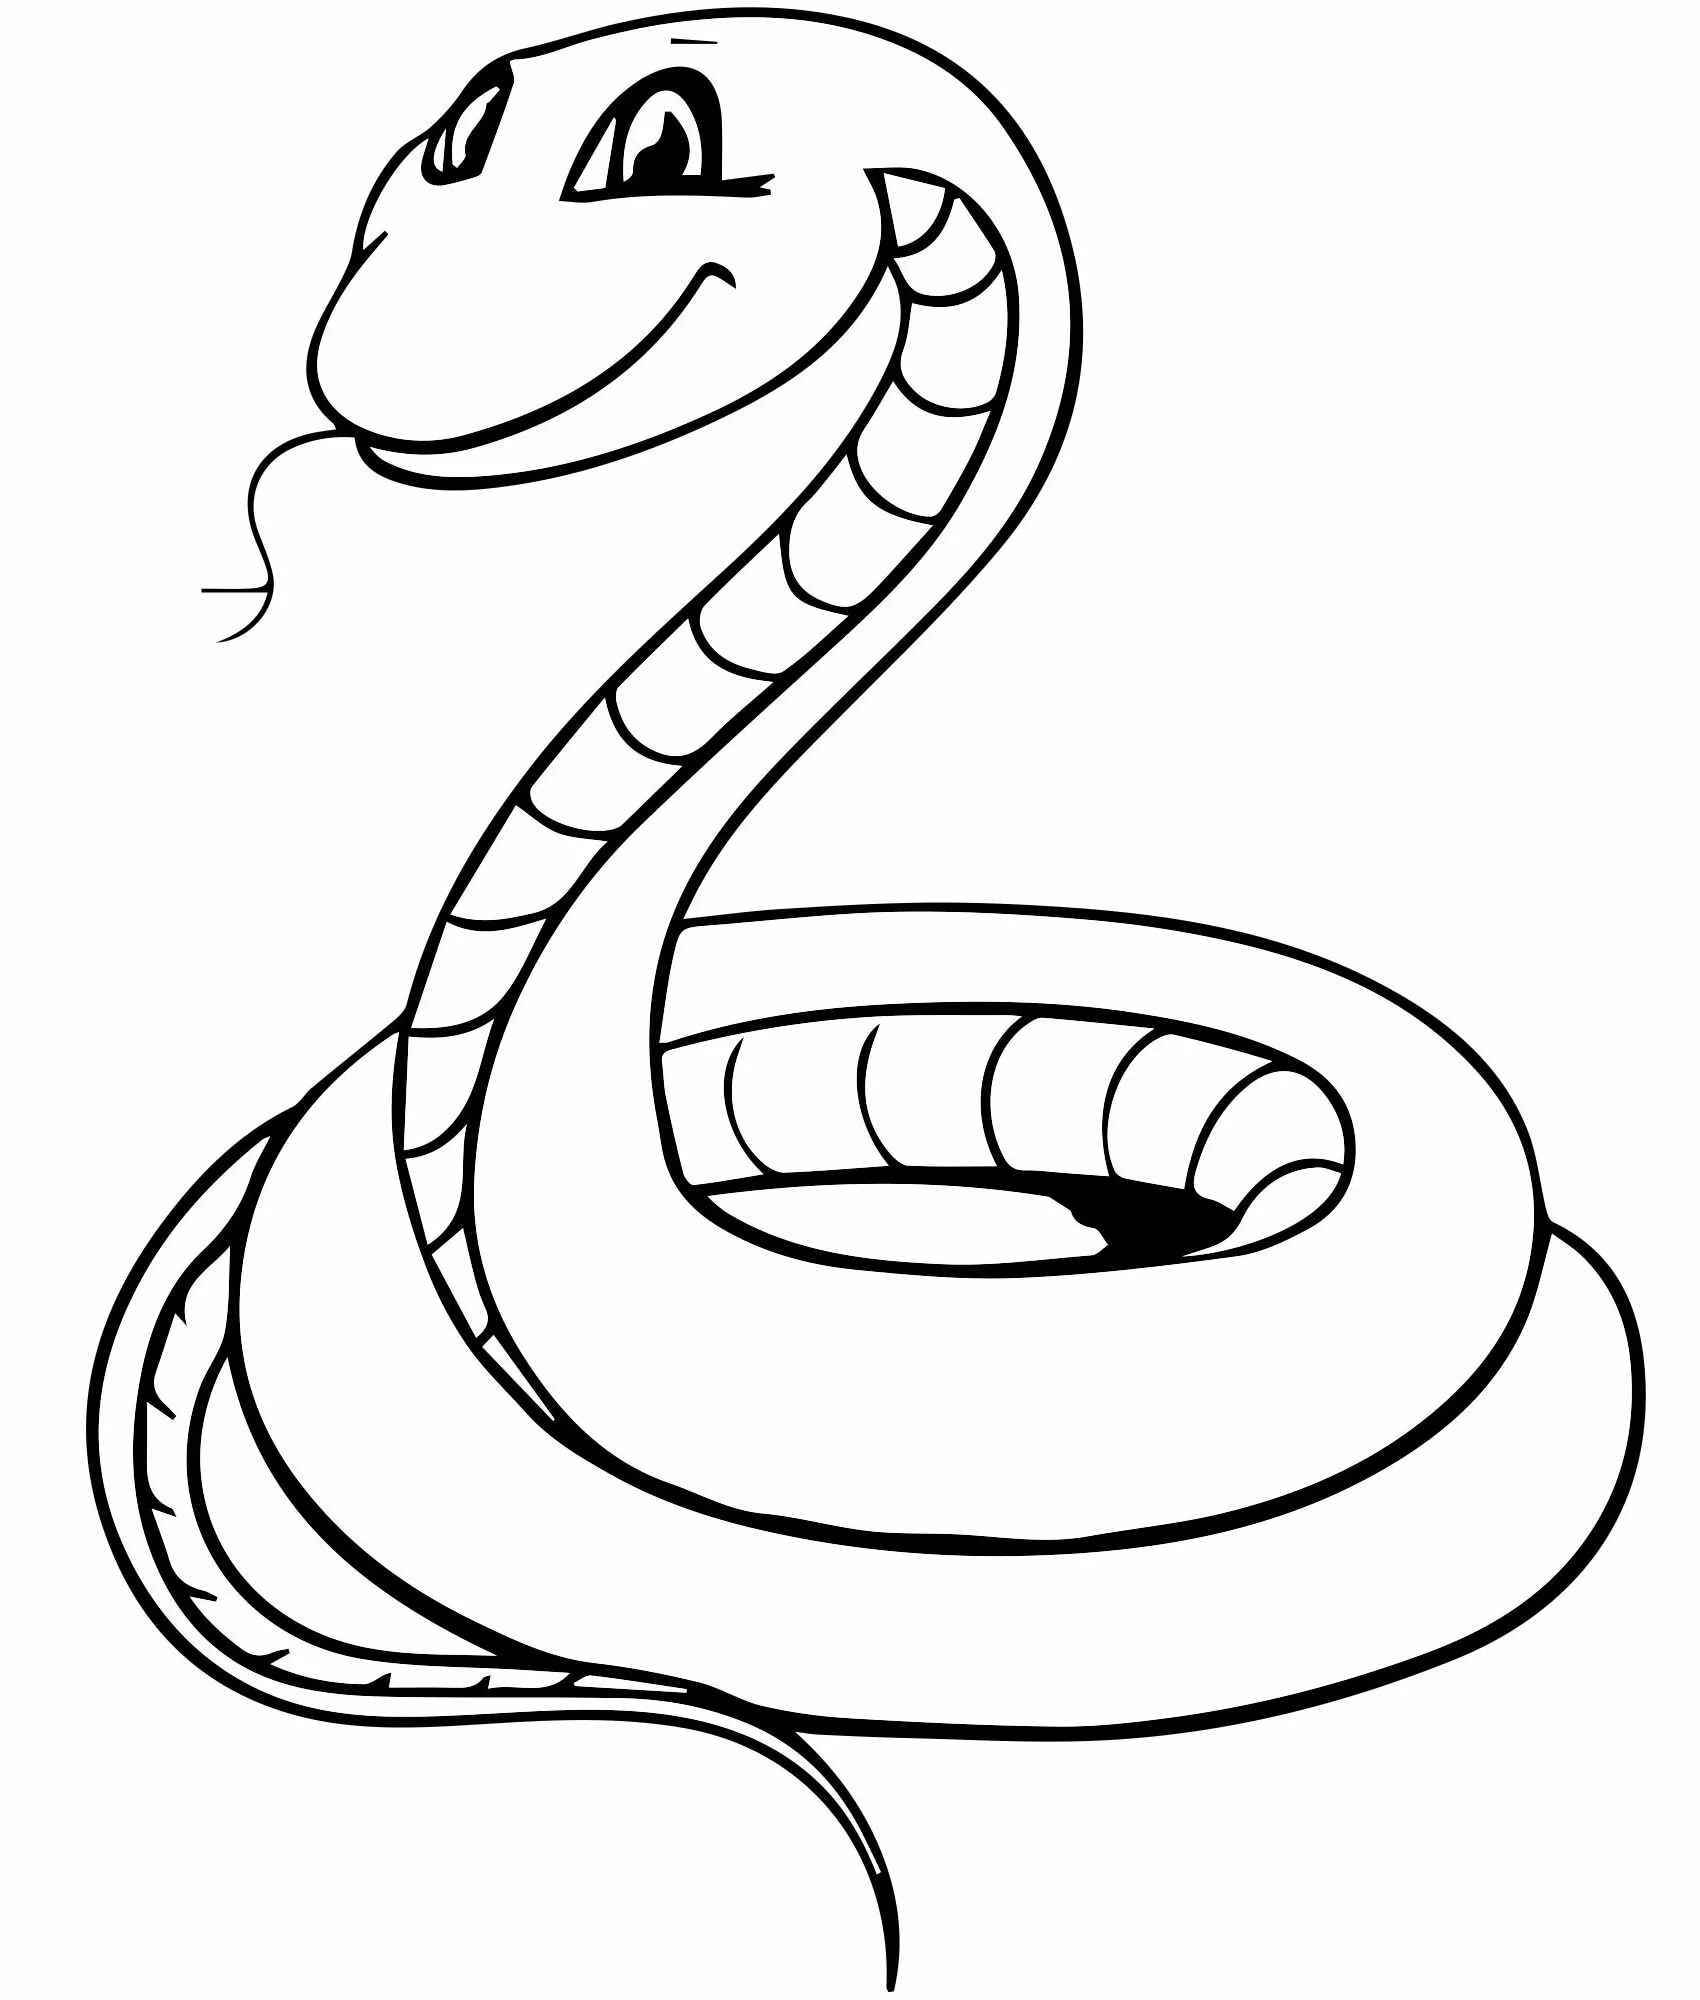 Раскраски змей распечатать. Змея раскраска для детей. Раскраска змеи для детей. Раскраска о змеях. Змея картинка раскраска.